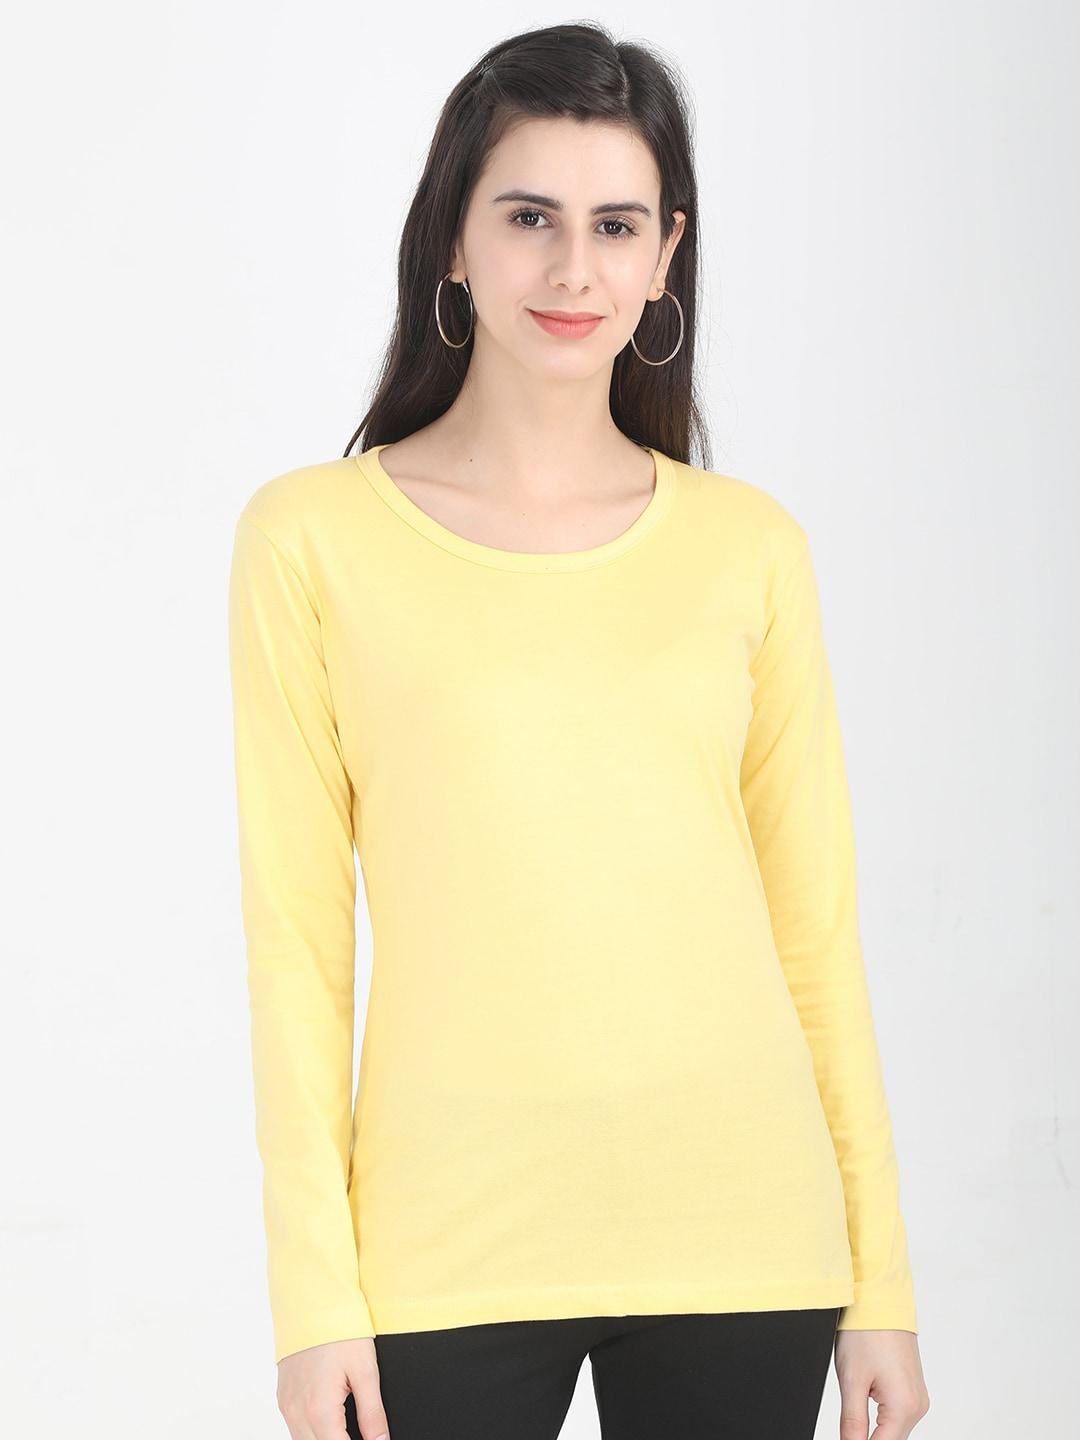 fleximaa-women-yellow-t-shirt